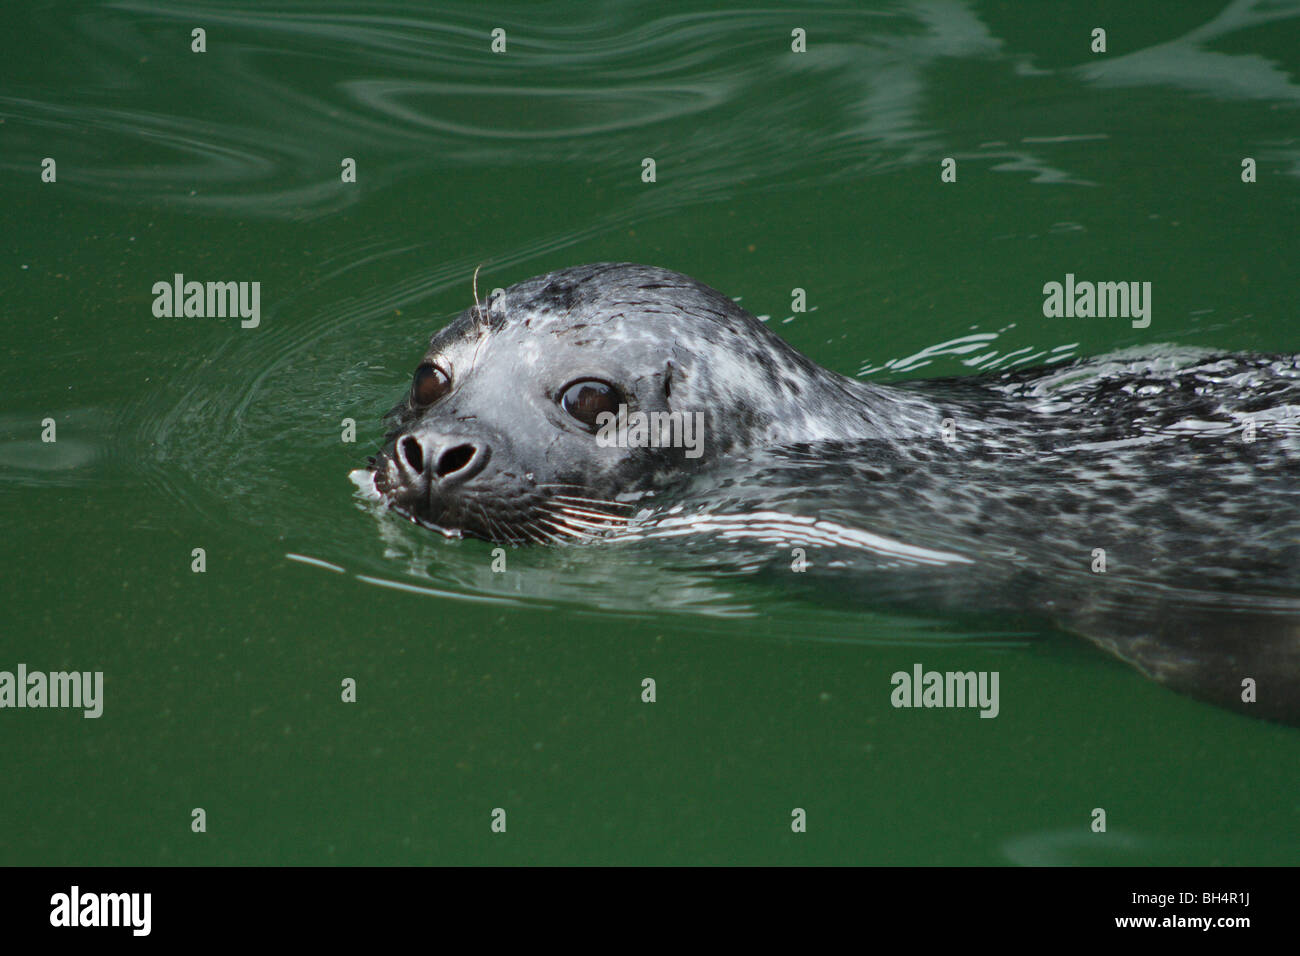 Juvenile common seal (Phoca vitulina) swimming in water. Stock Photo